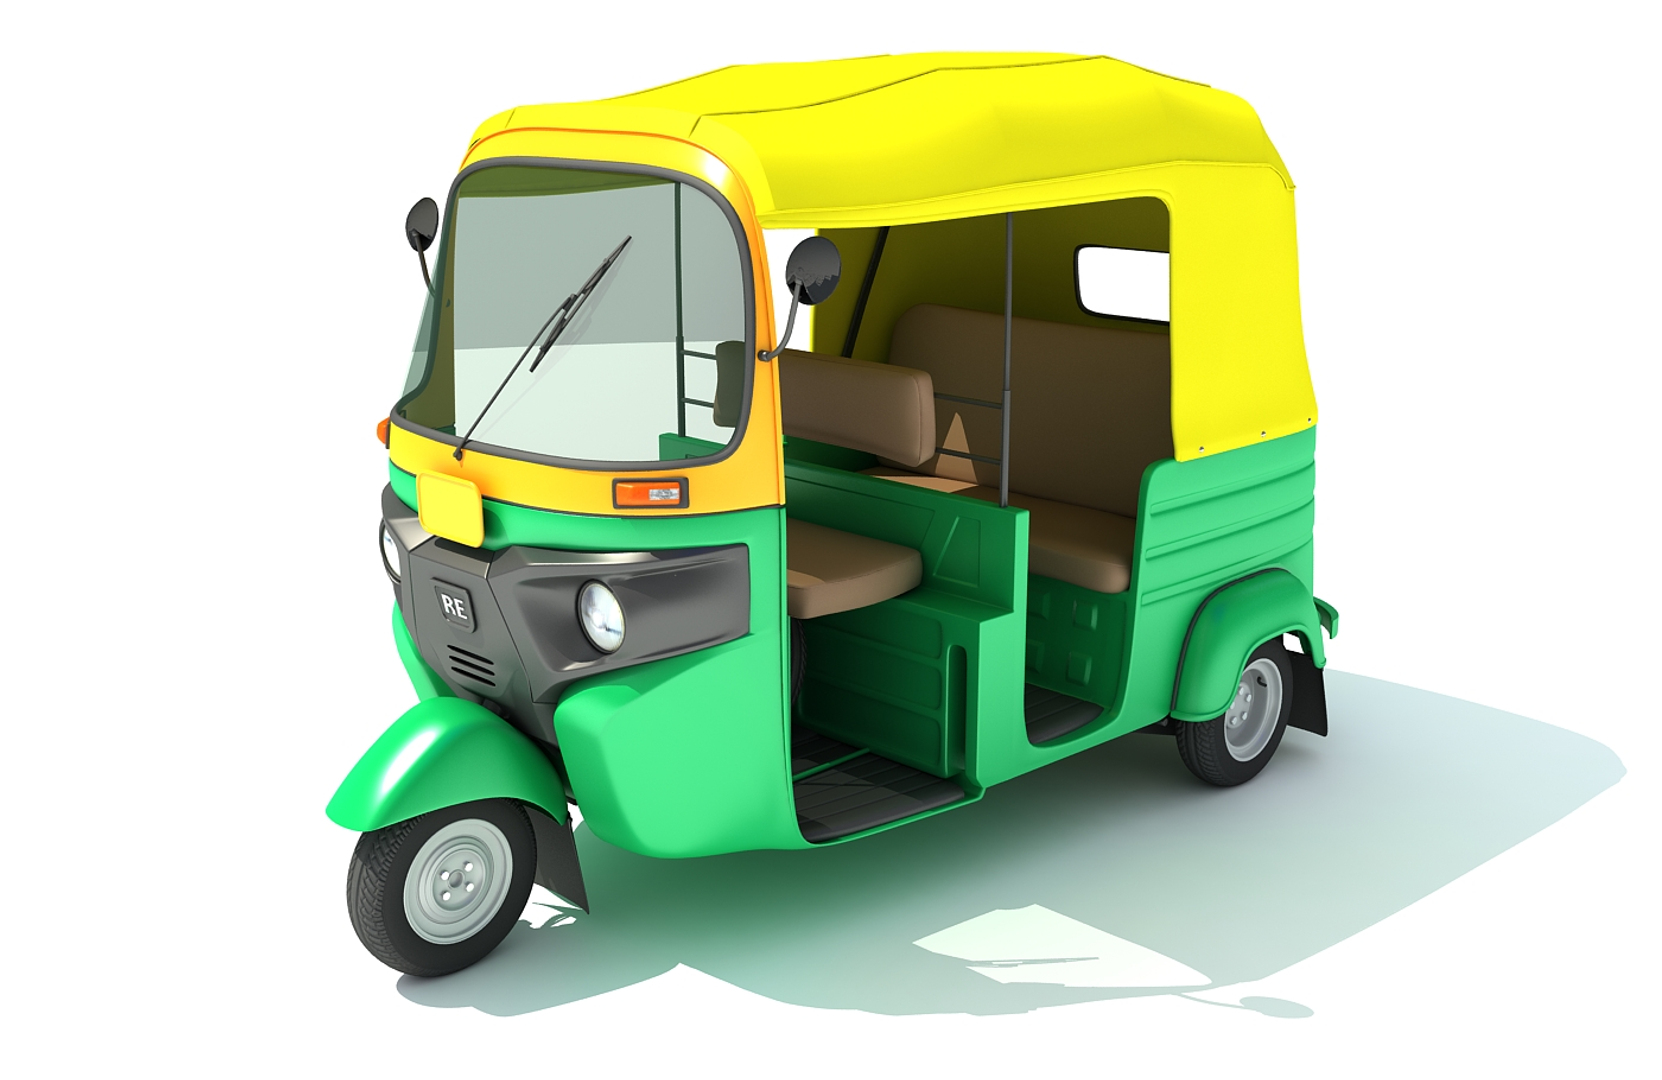 Auto Rickshaw cdr 13 version fully editable file - TR BAHADURPUR